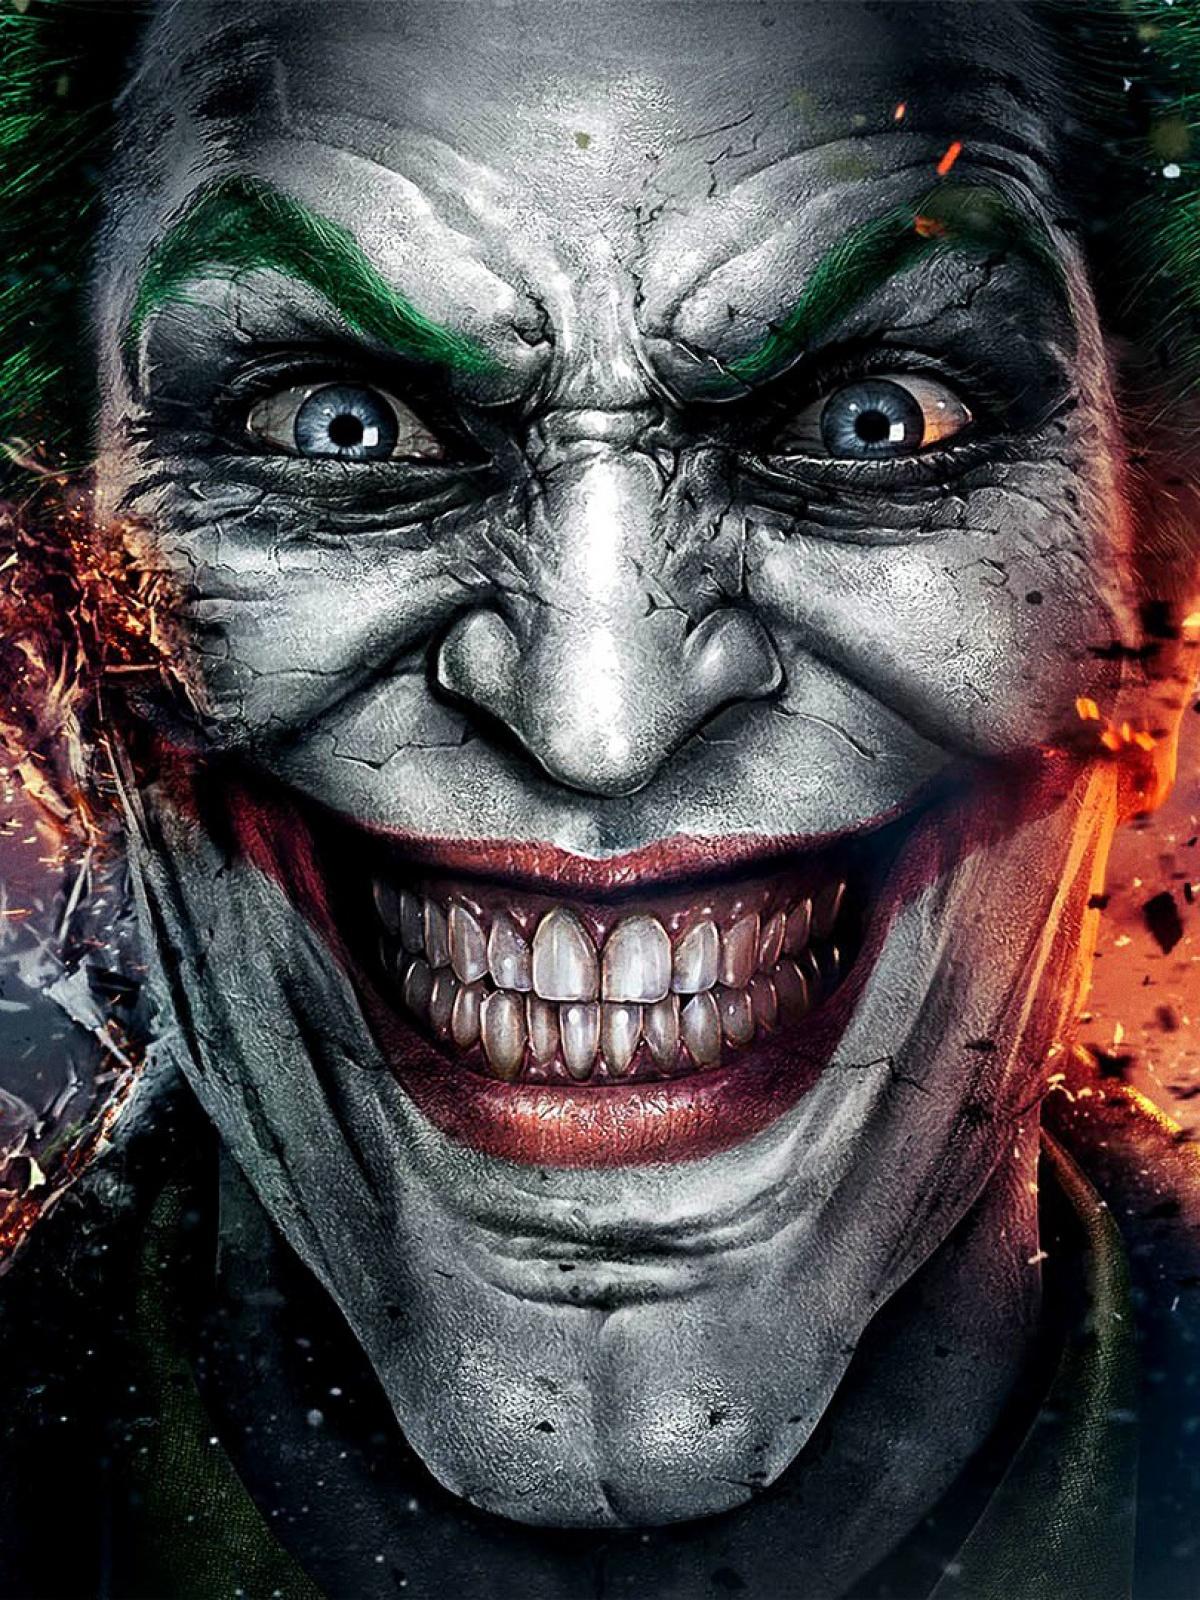 The Joker Batman Smile Android Wallpaper free download